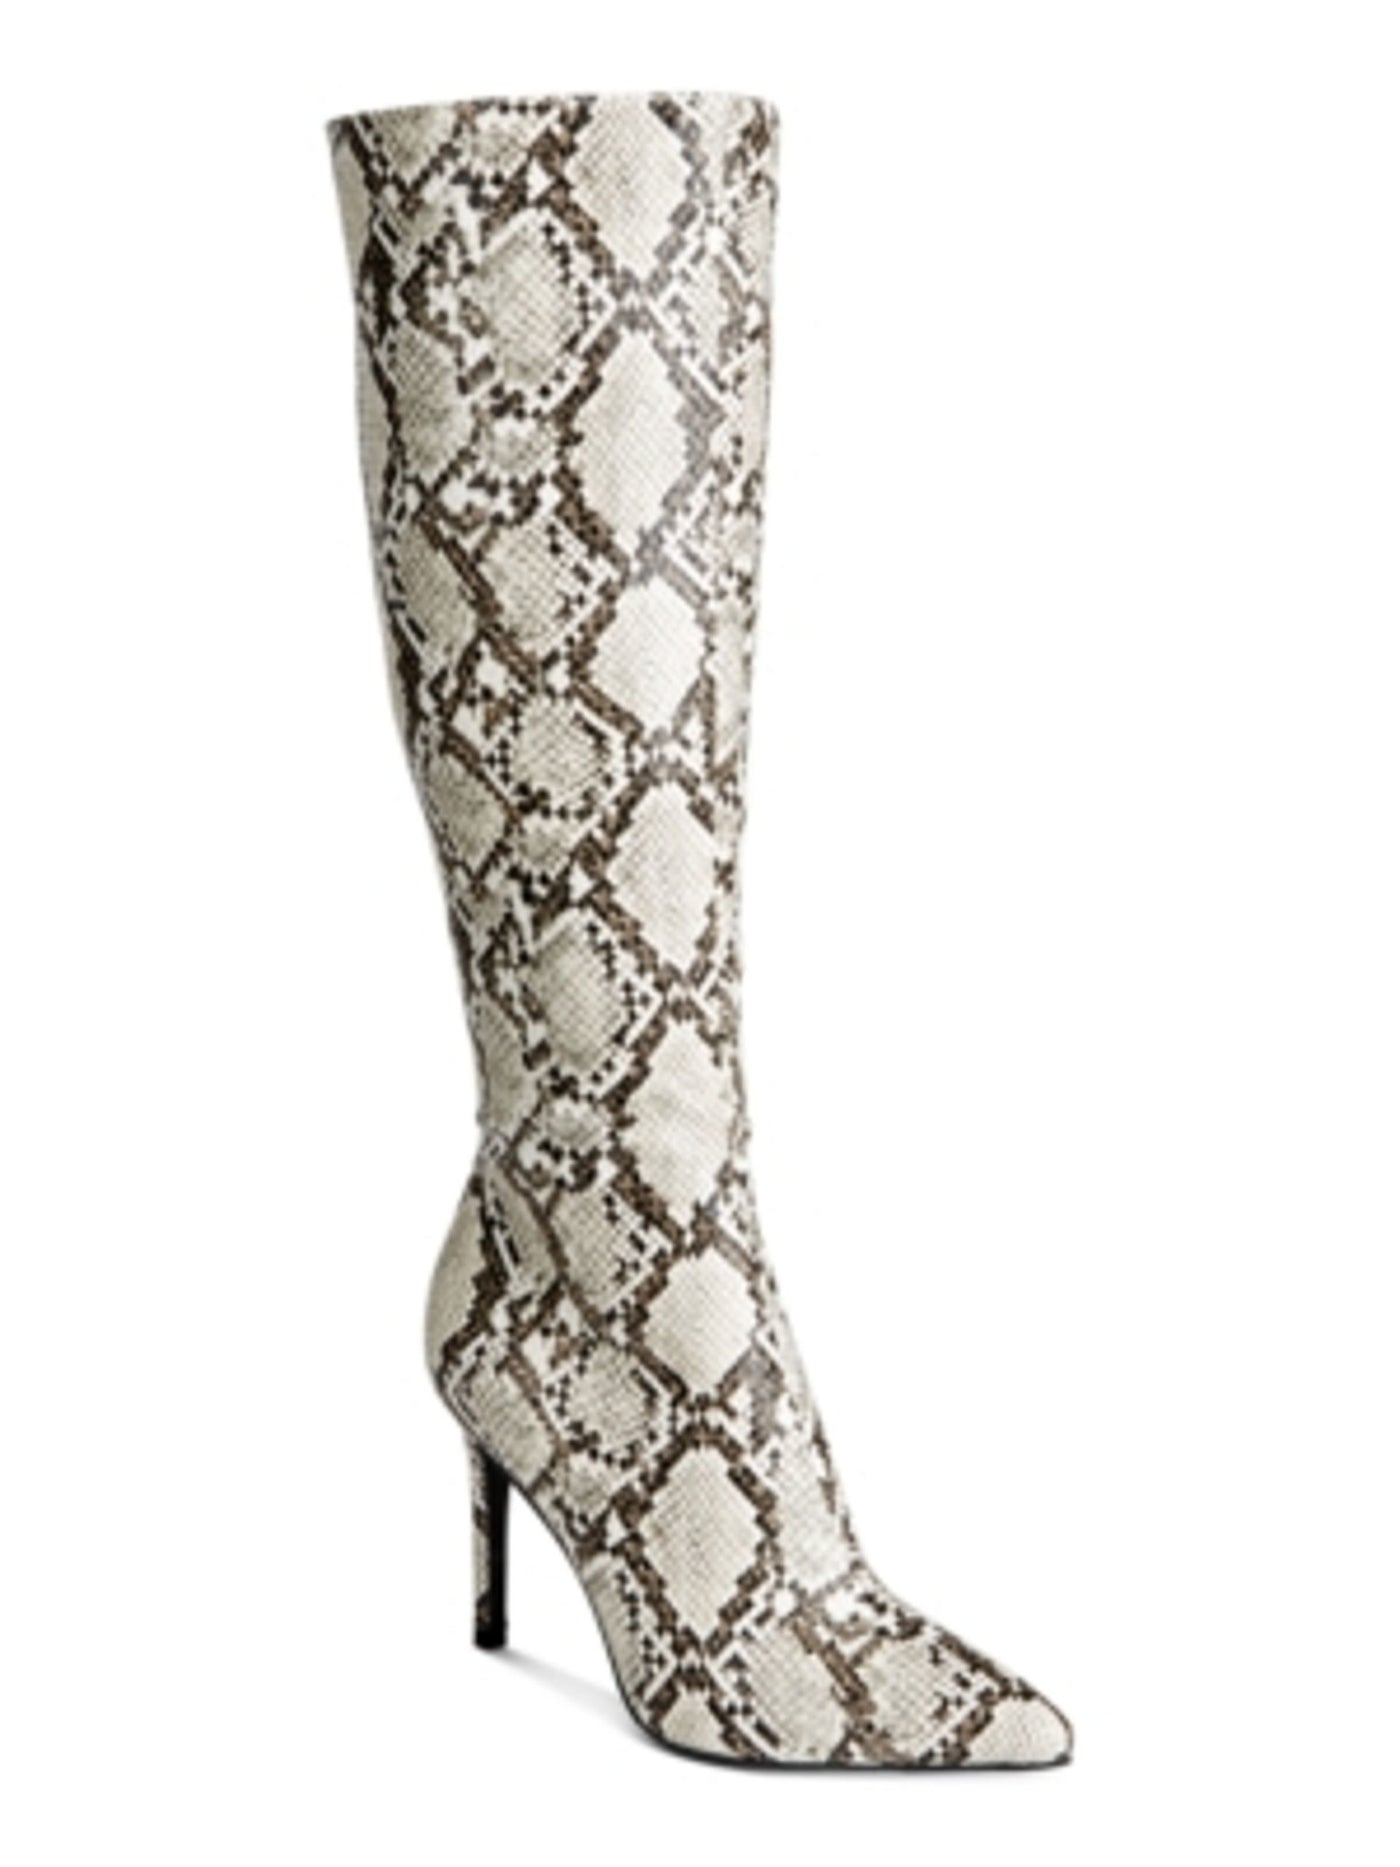 THALIA SODI Womens Brown Animal Print Pointed Toe Stiletto Zip-Up Dress Boots 5